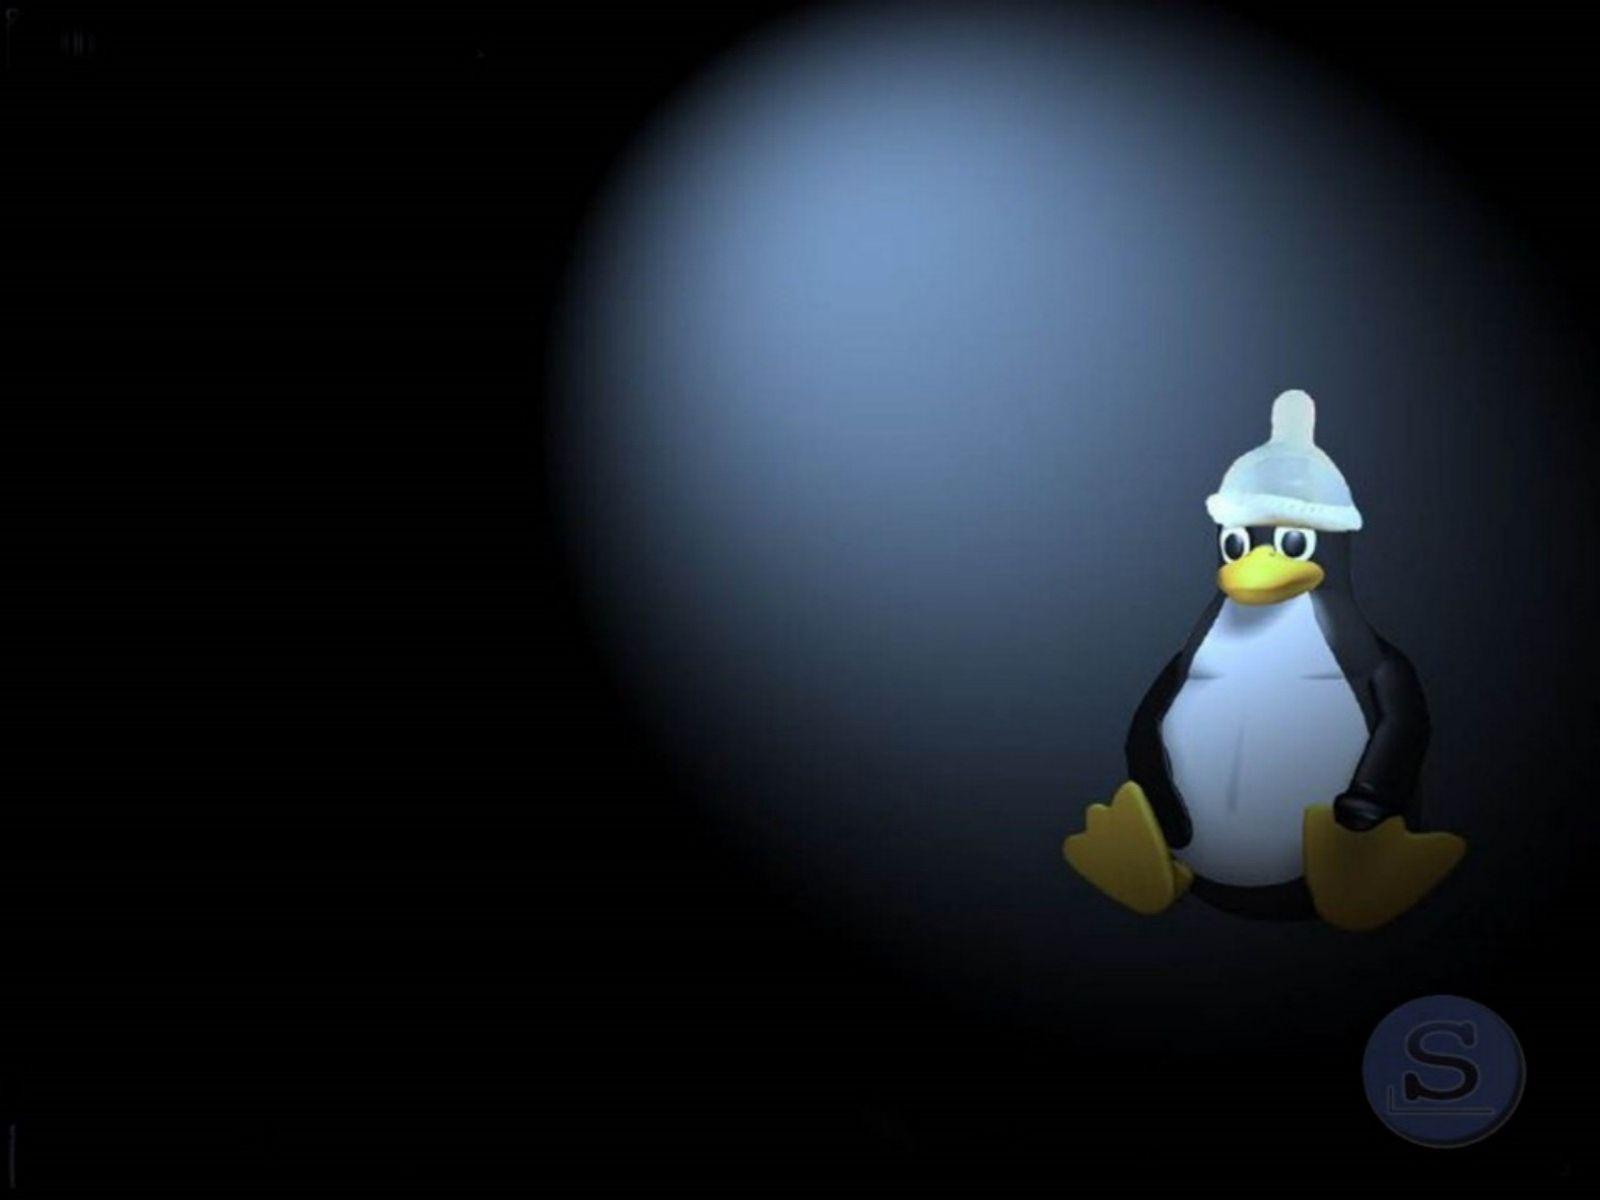 Tux Penguin Linux Slackware Wallpaper The New Background For Slack